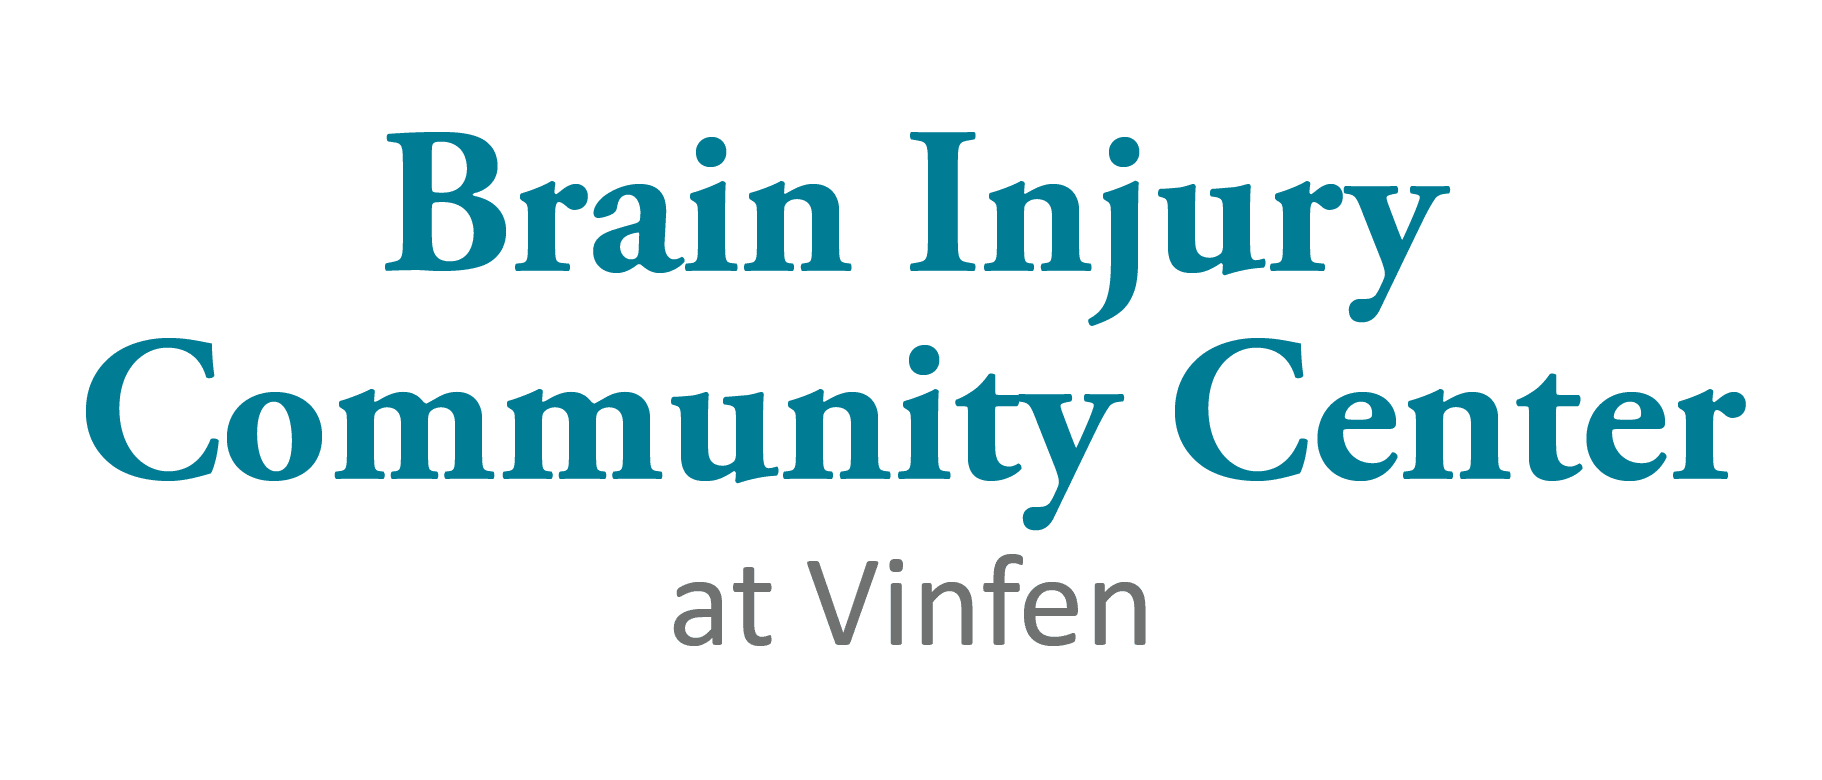 Vinfen Brain Injury Community Center Logo Horizontal Color